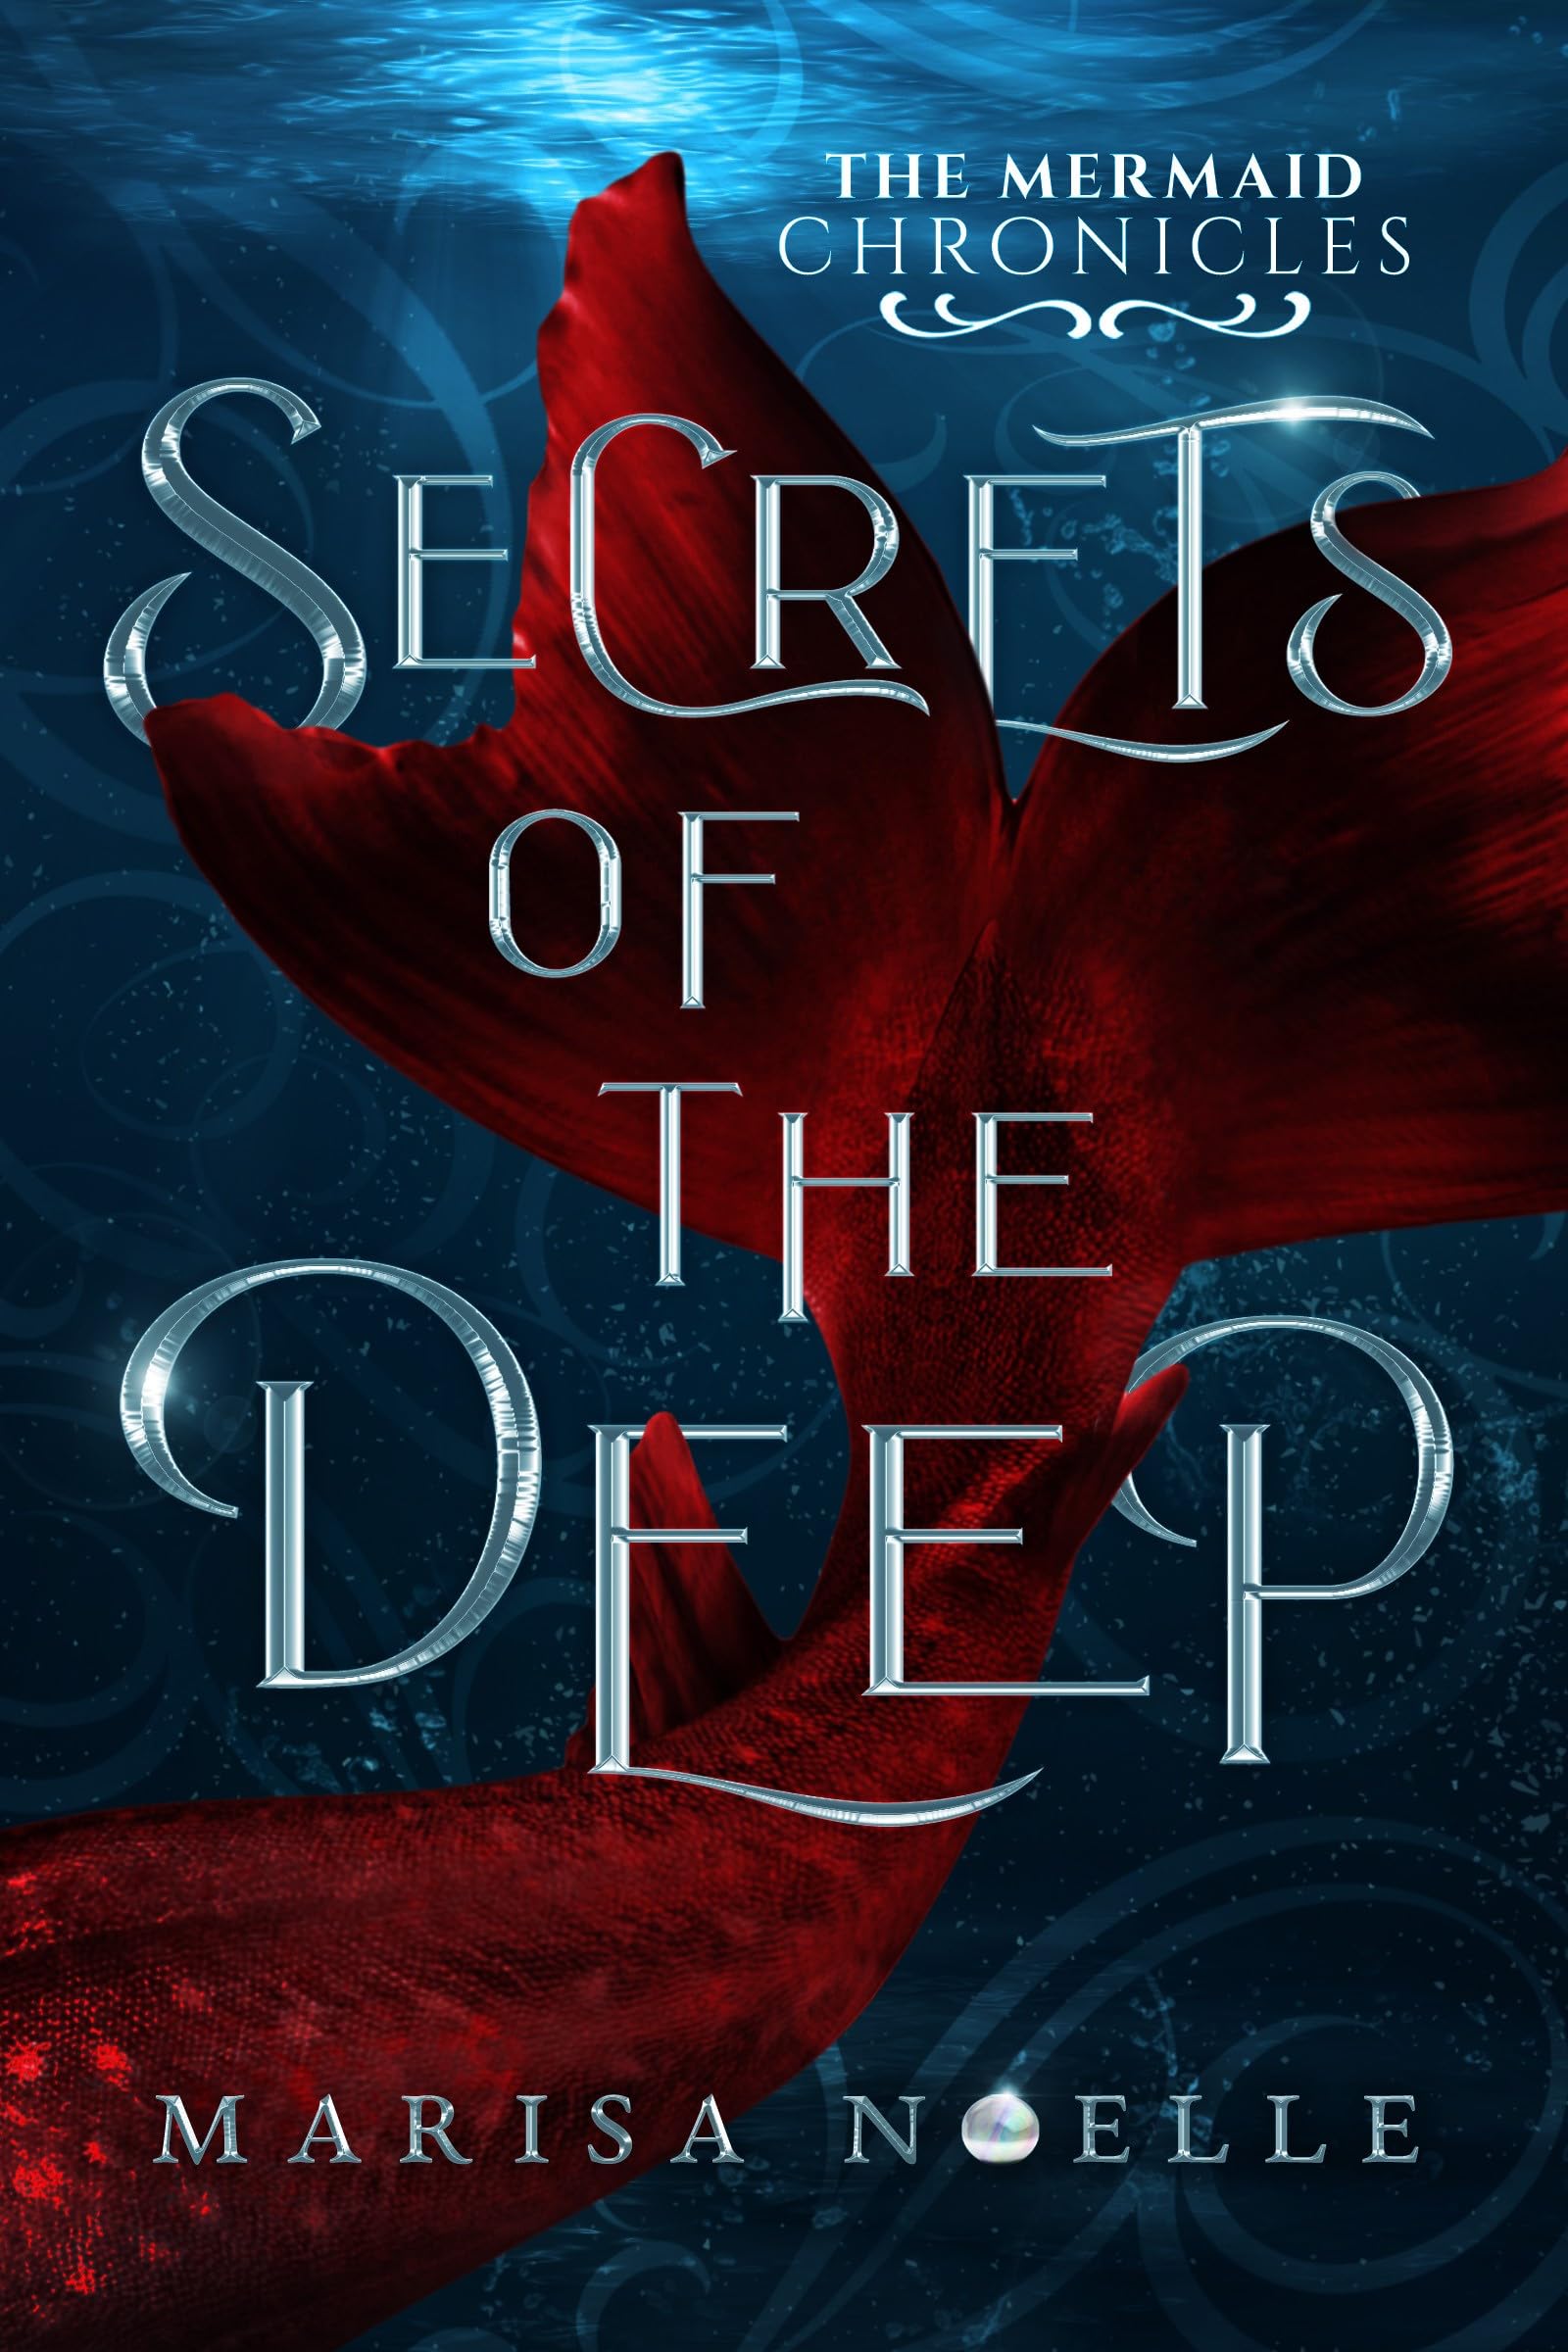 Secrets of the Deep